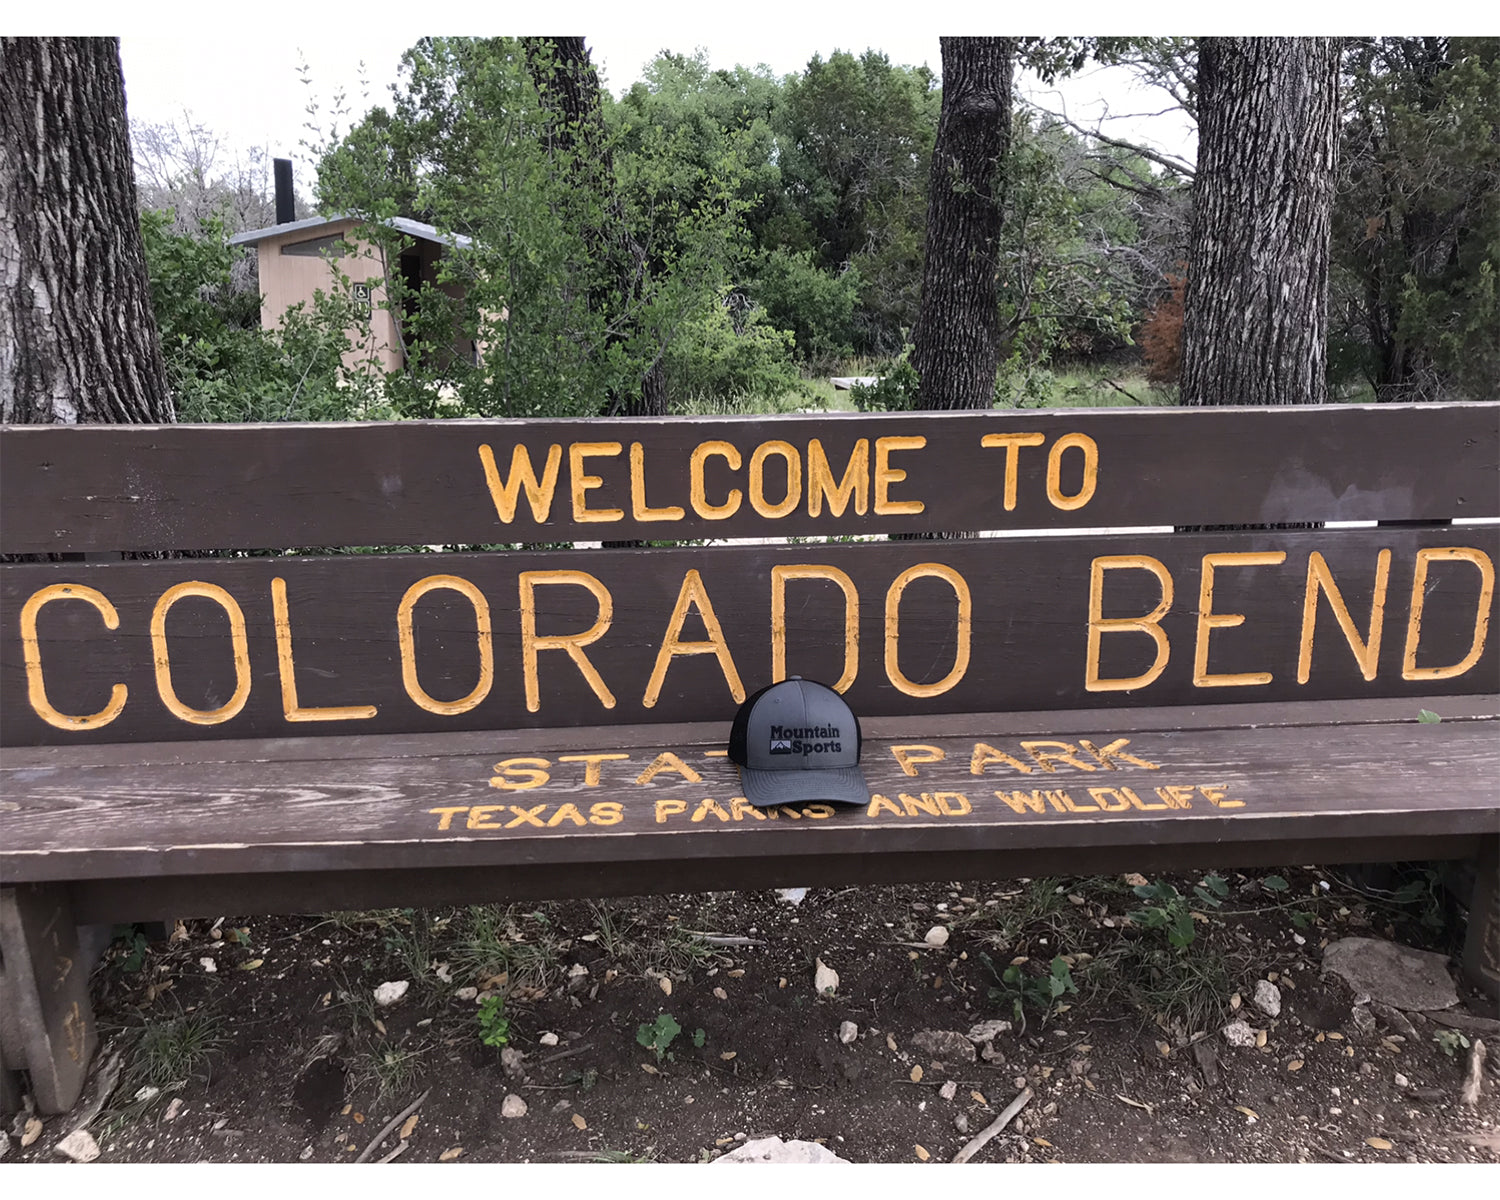 Trip Report: Colorado Bend State Park by Josh Davis